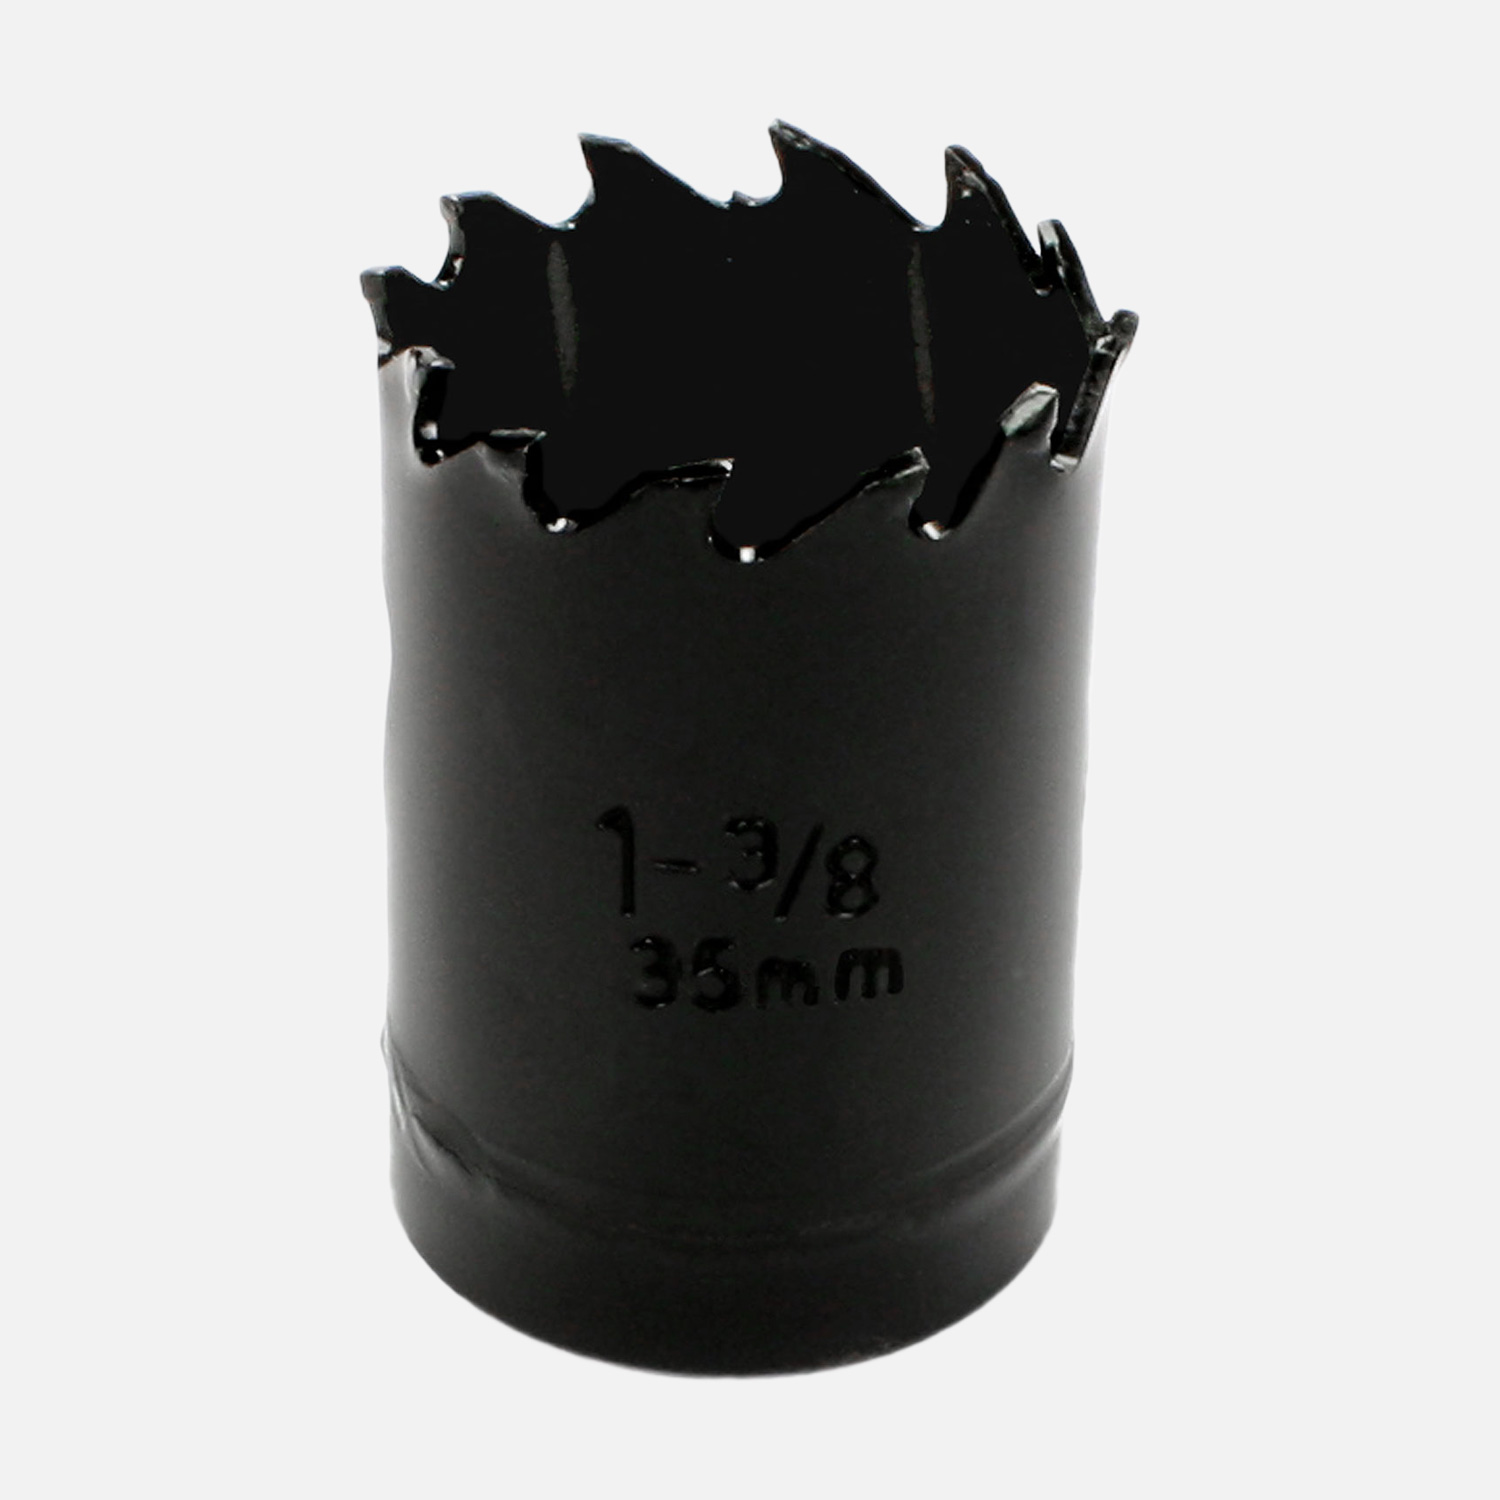 1 MPS Lochsäge - 35 mm Ø - Hartmetall - für Gipskarton & Holz geeignet